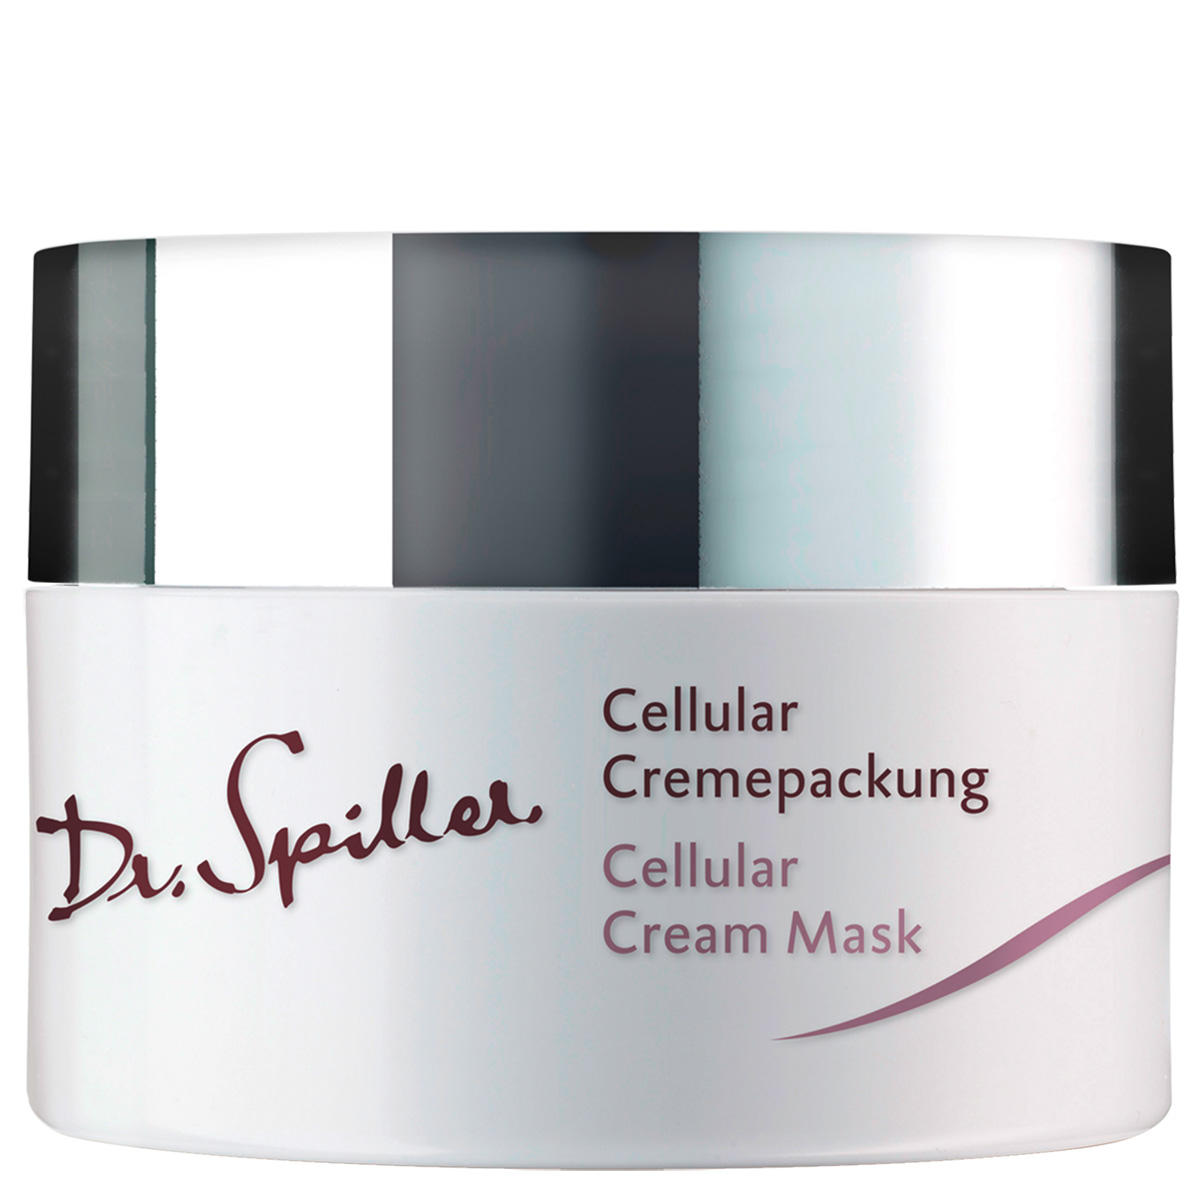 Dr. Spiller Biomimetic SkinCare Cellular Cream Pack 50 ml - 1